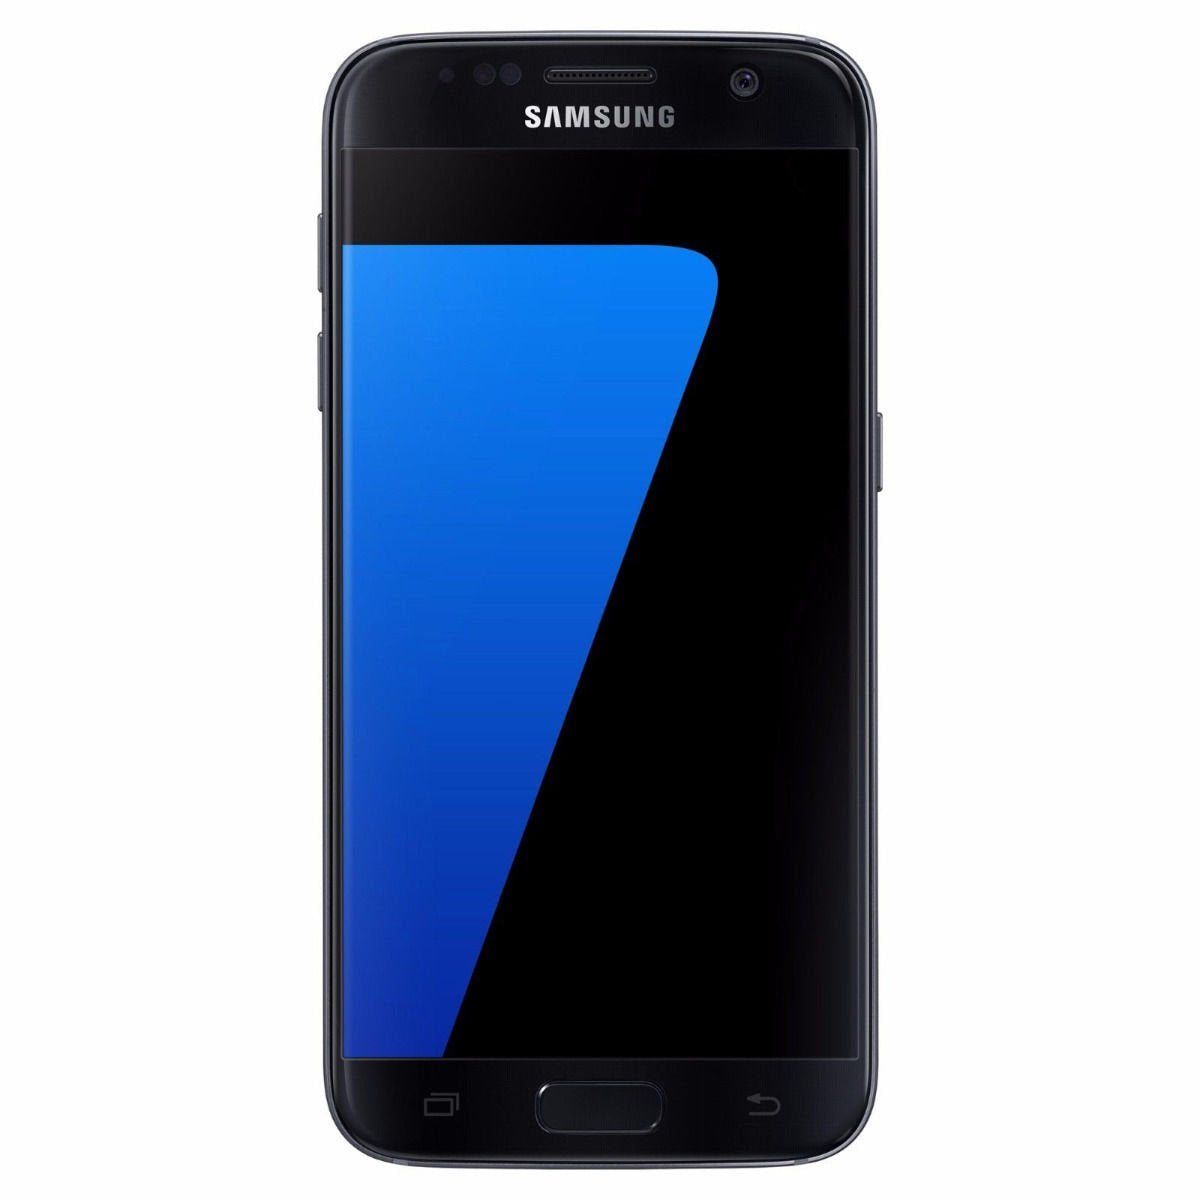 Samsung Galaxy S7 32GB - Black (Bell)